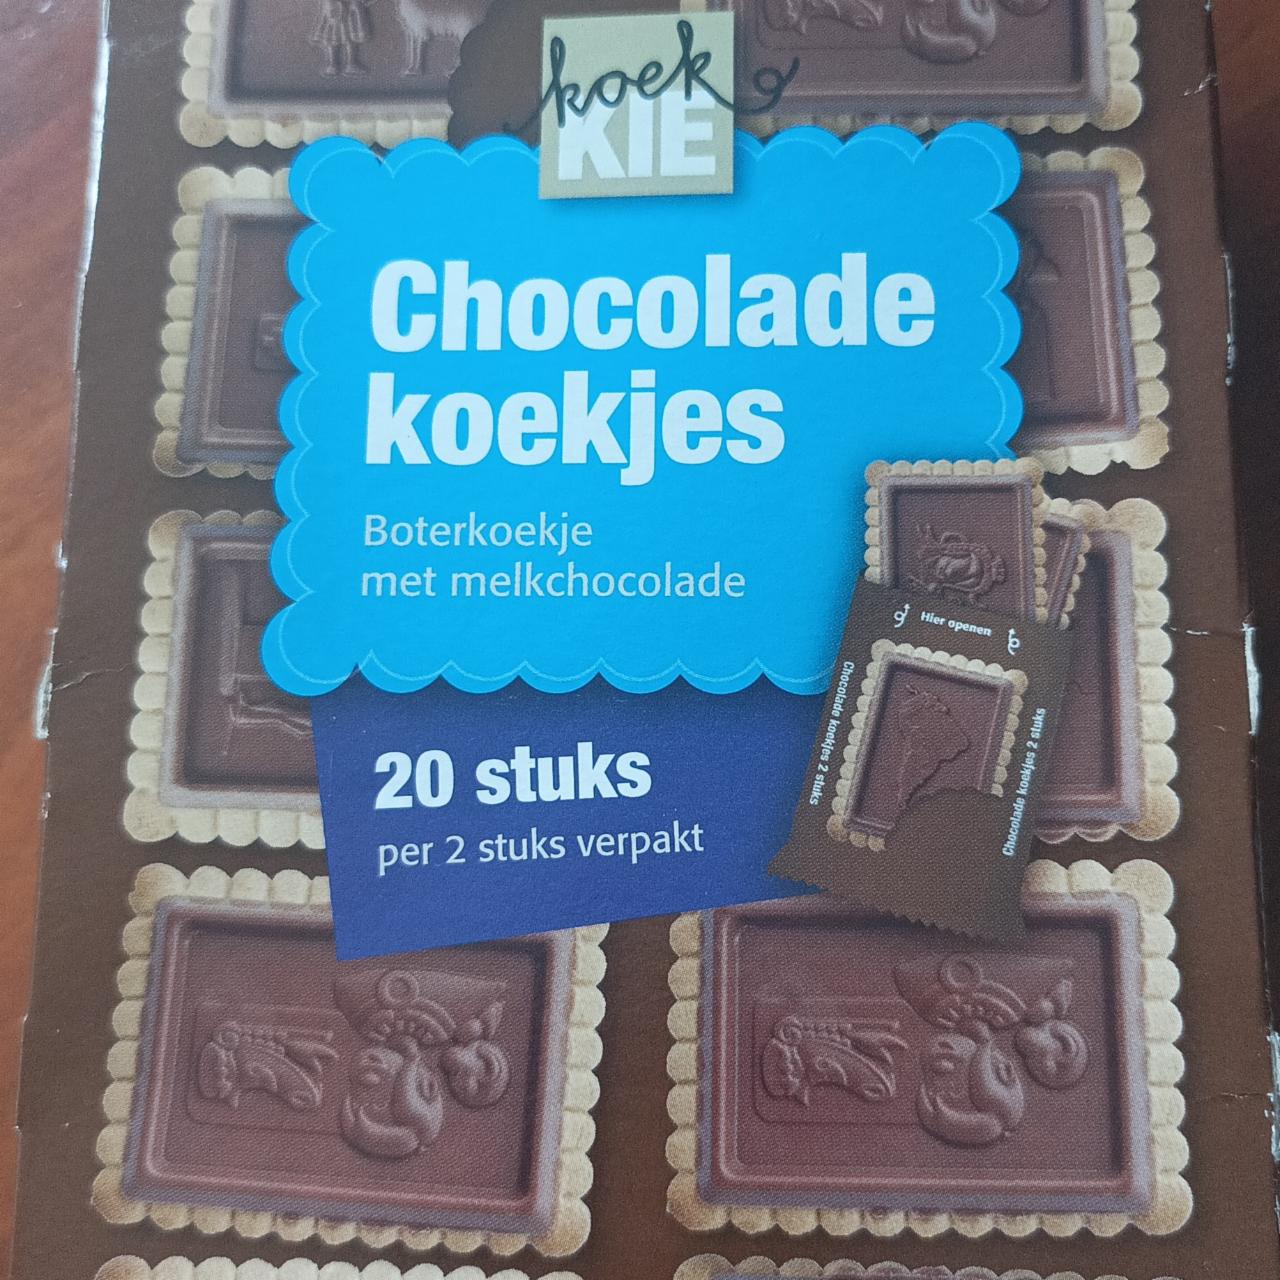 Zdjęcia - Chocolade koekjes Koekkie